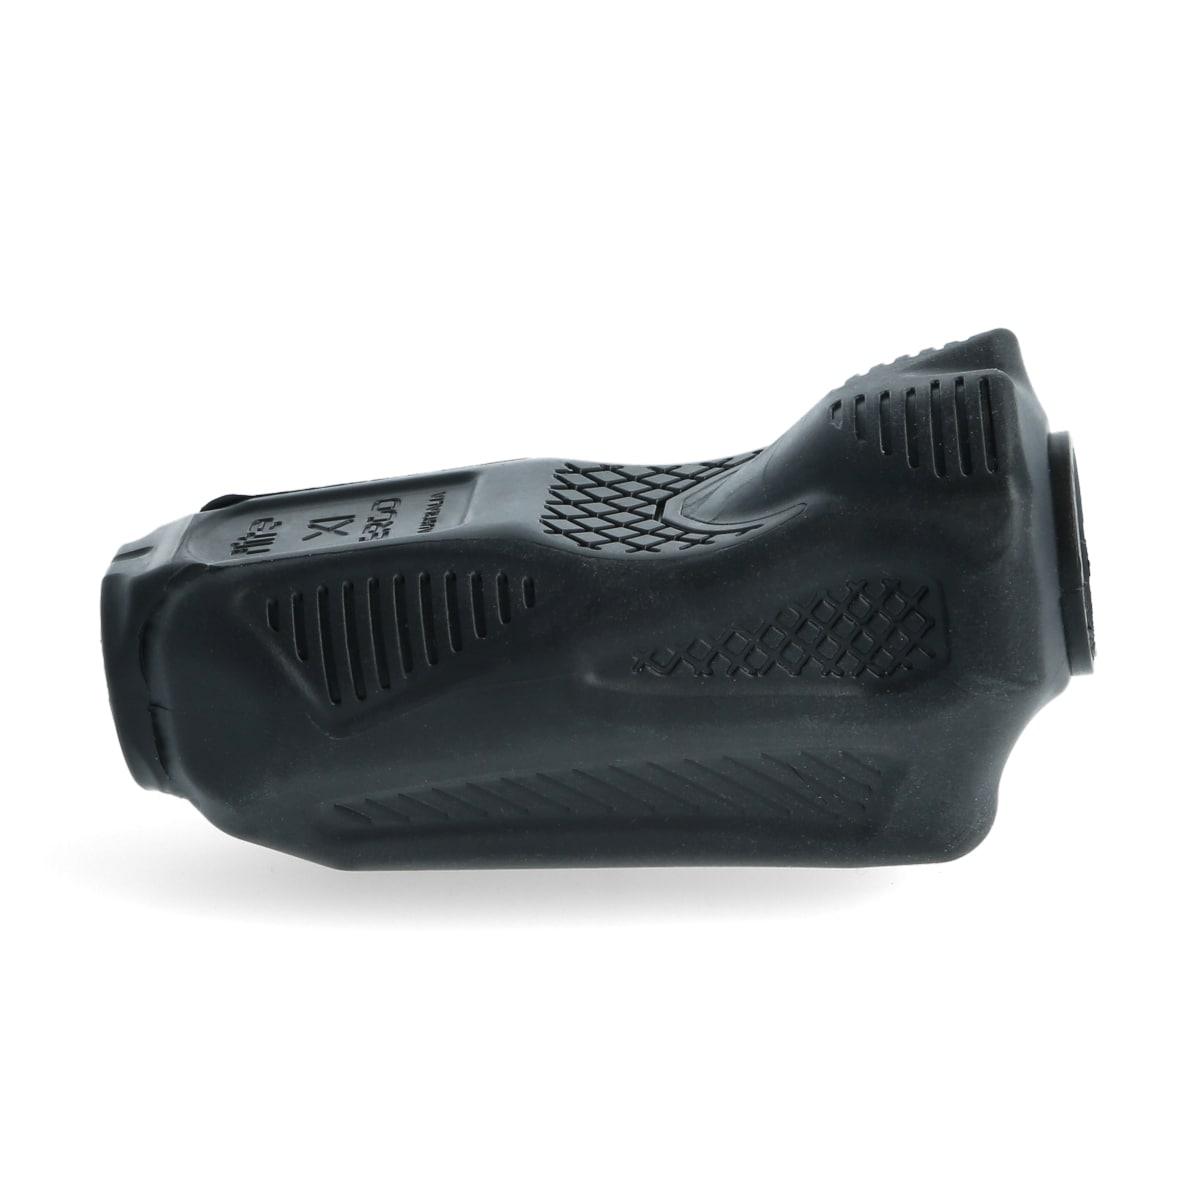 InkJecta Flite X1 Disposable Ergo Cartridge Grips